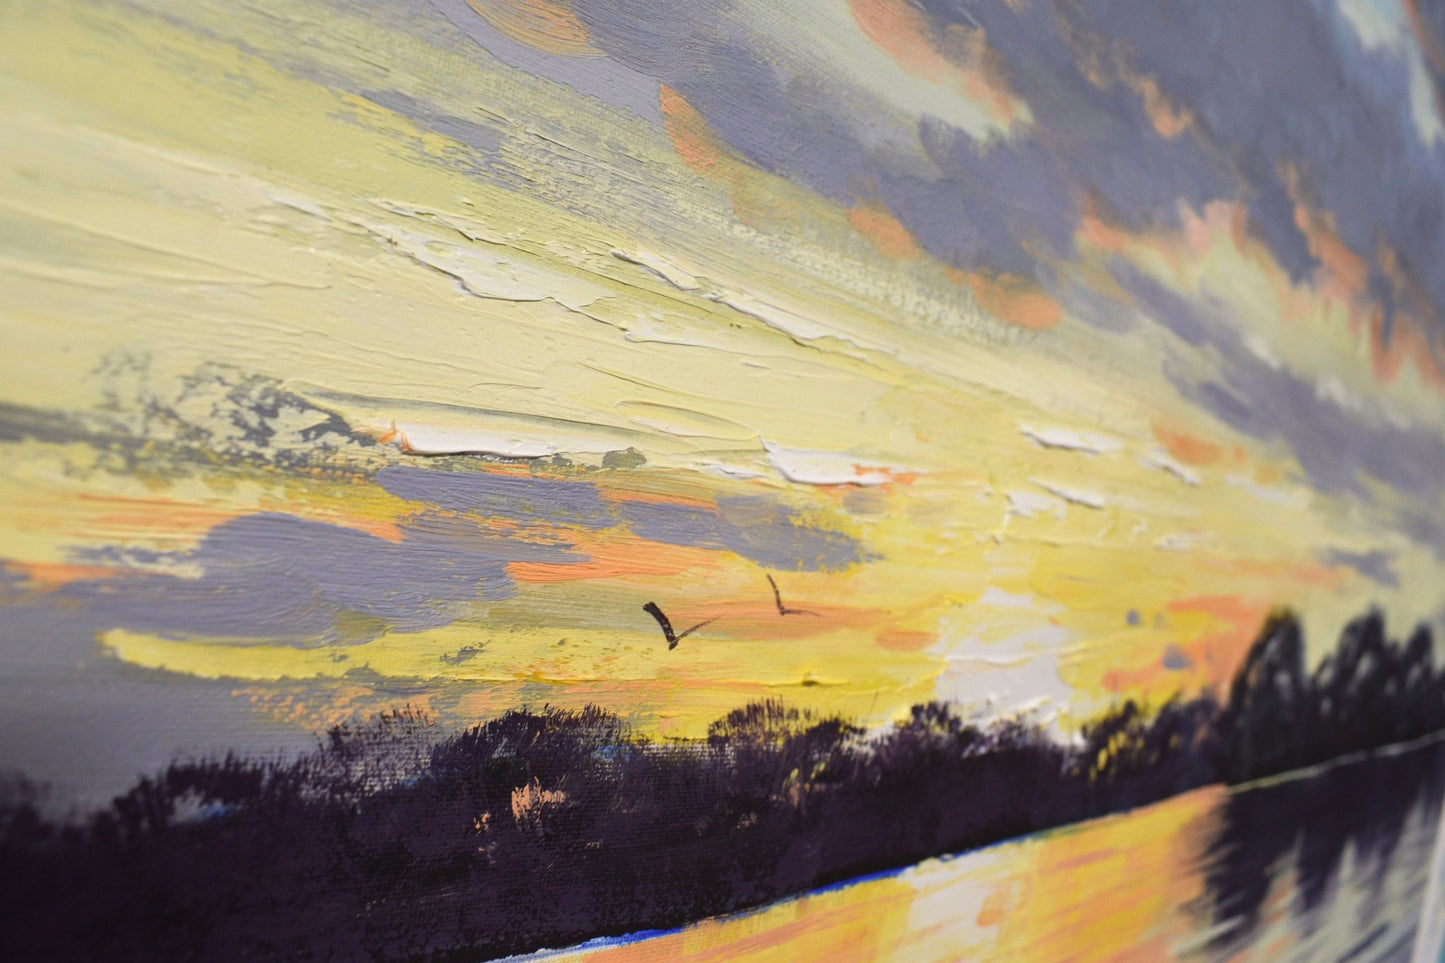 Ocean Sunset Colours Original oil painting